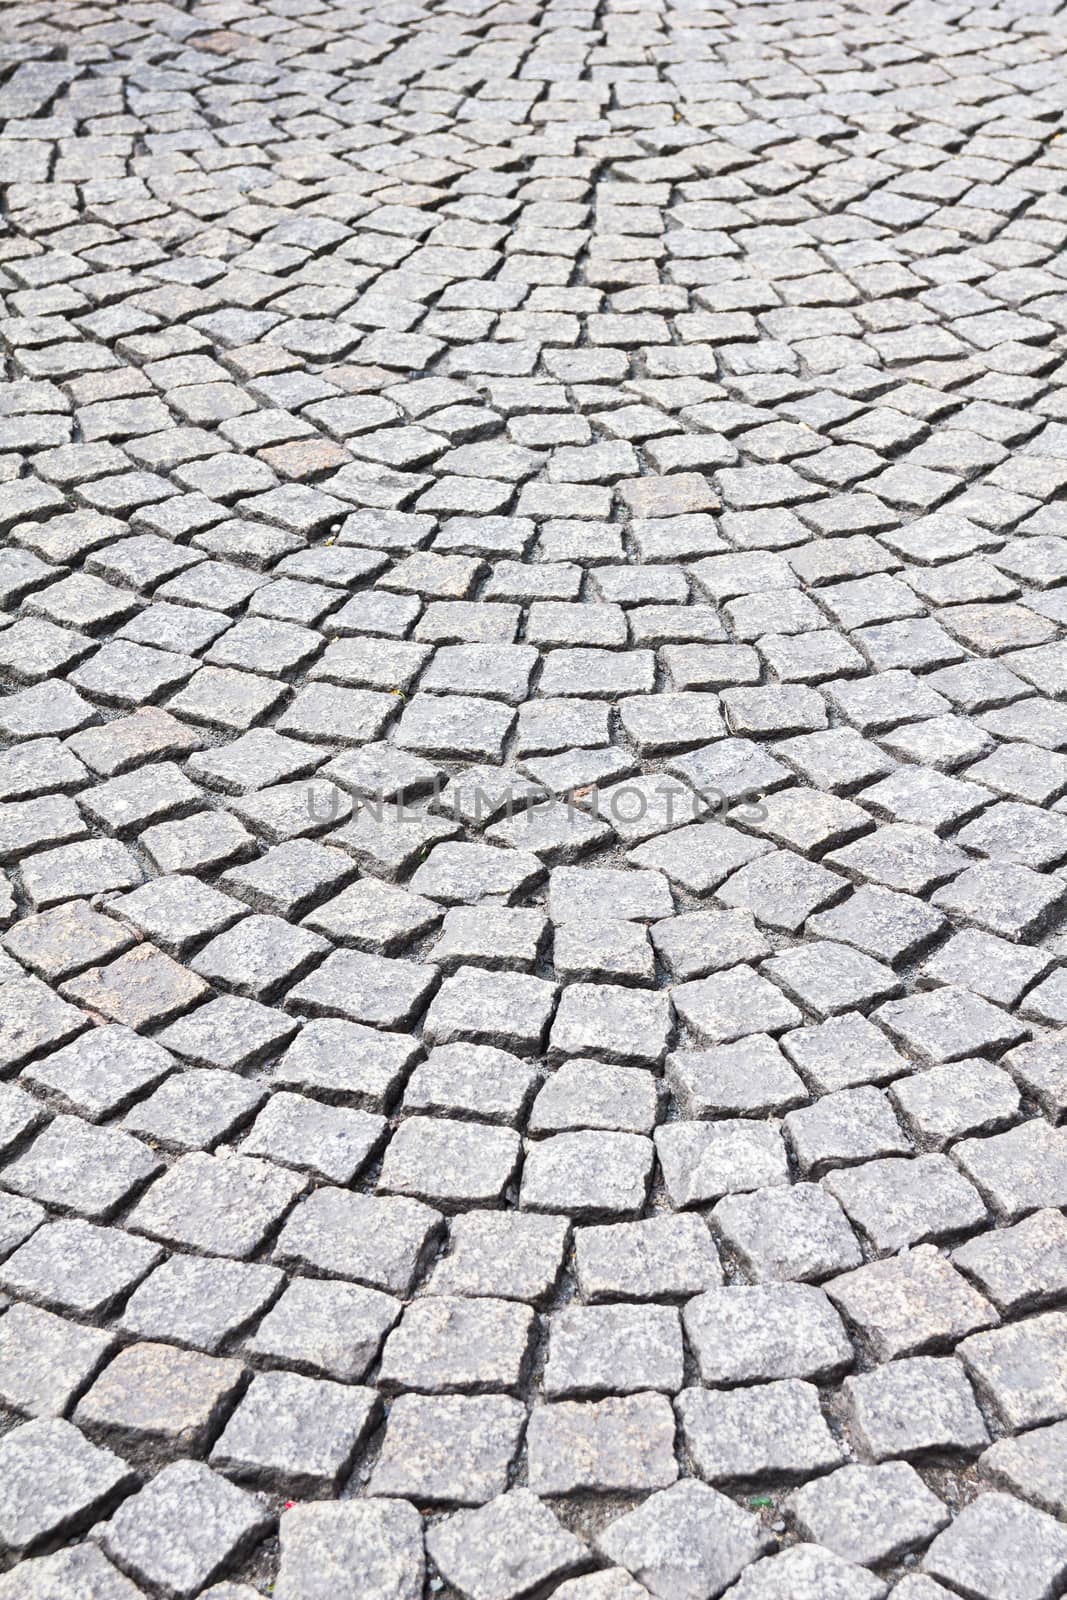 Cobblestoned pavement by gianliguori